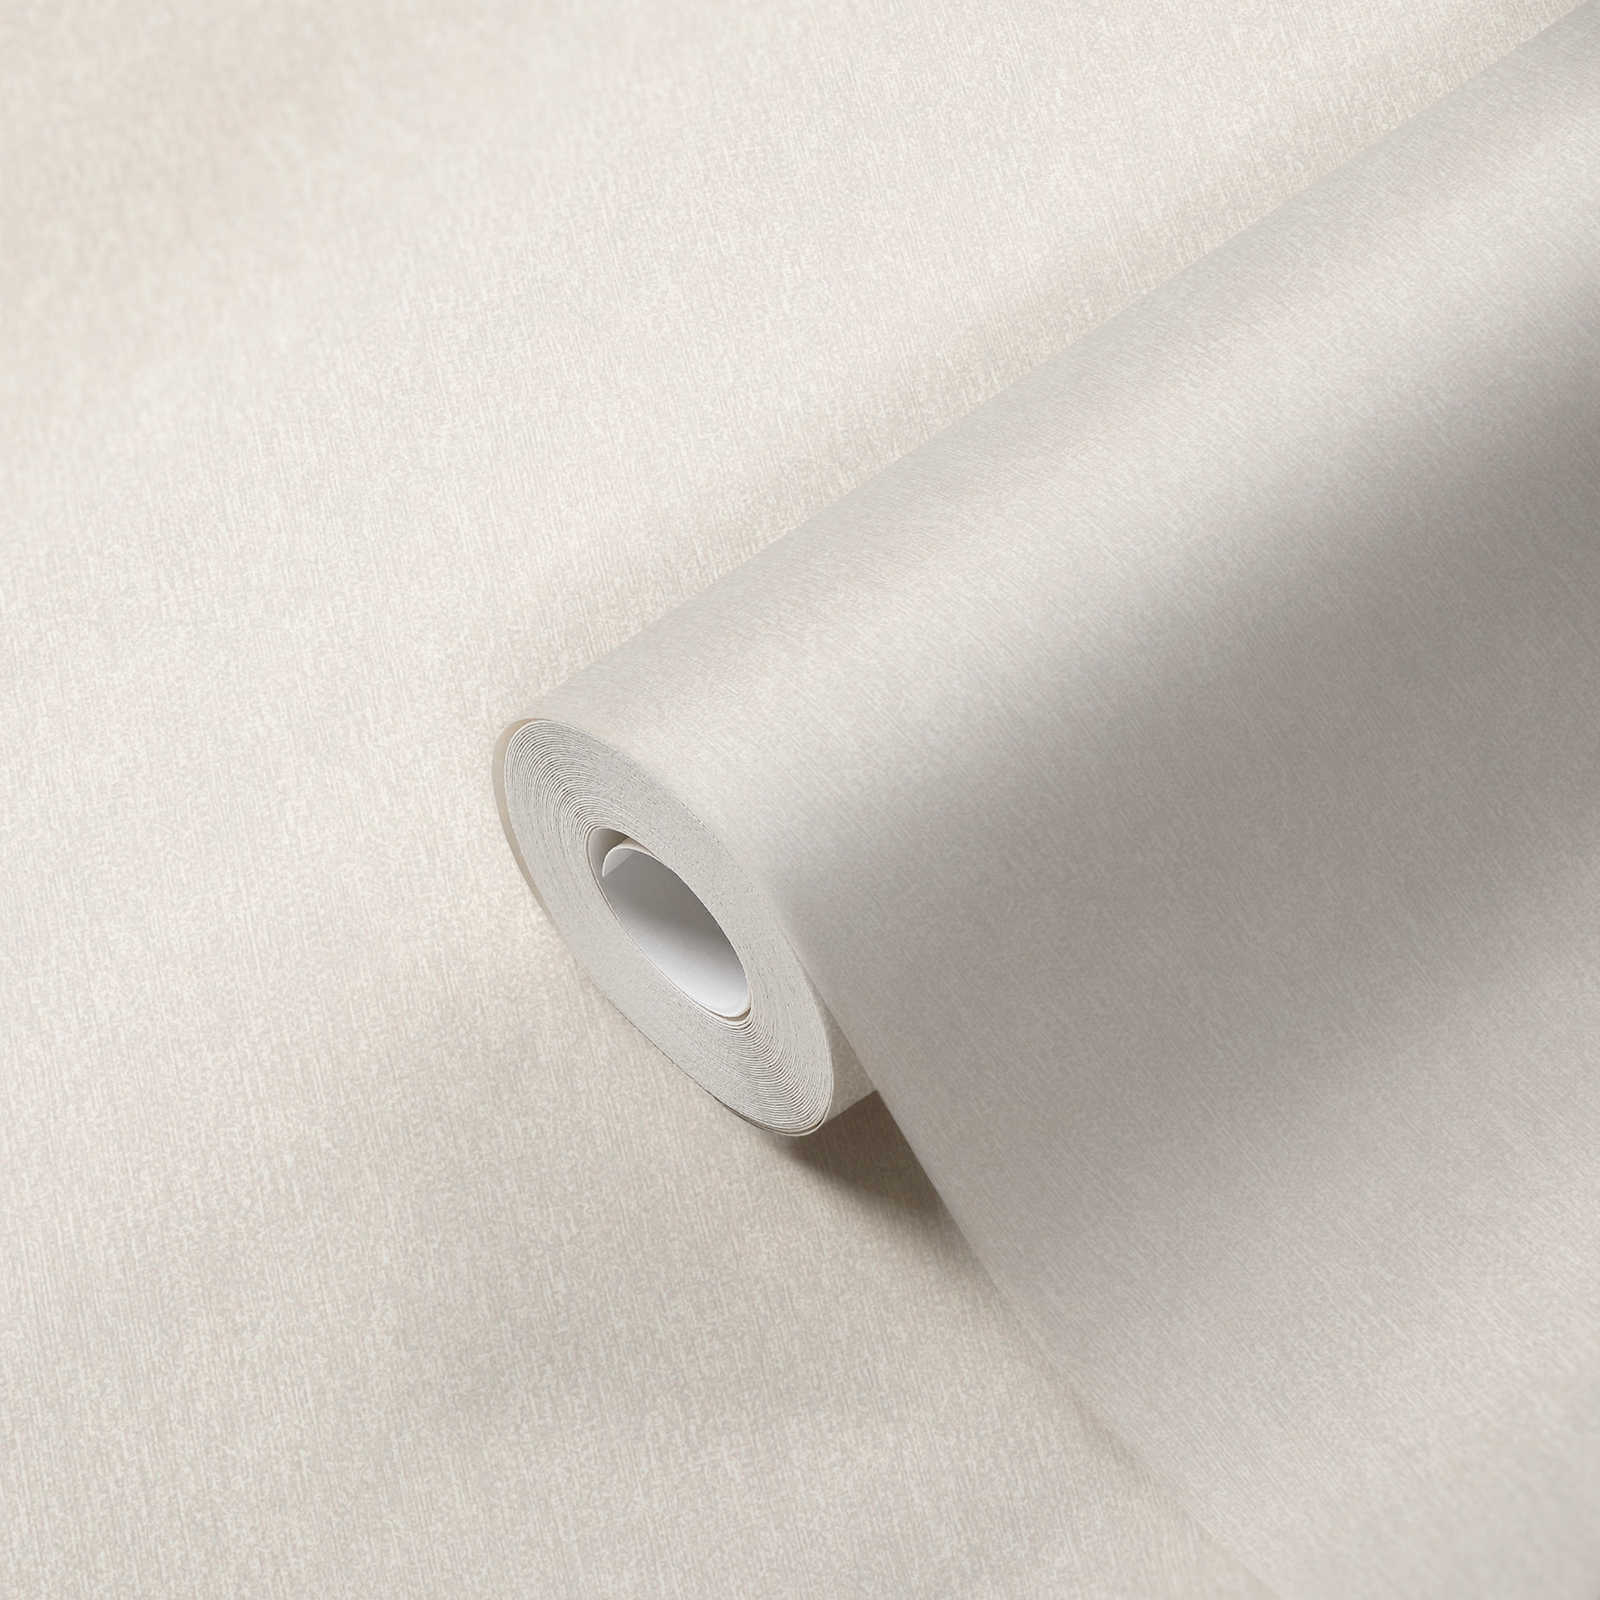             Carta da parati liscia opaca e con struttura ottica - bianco
        